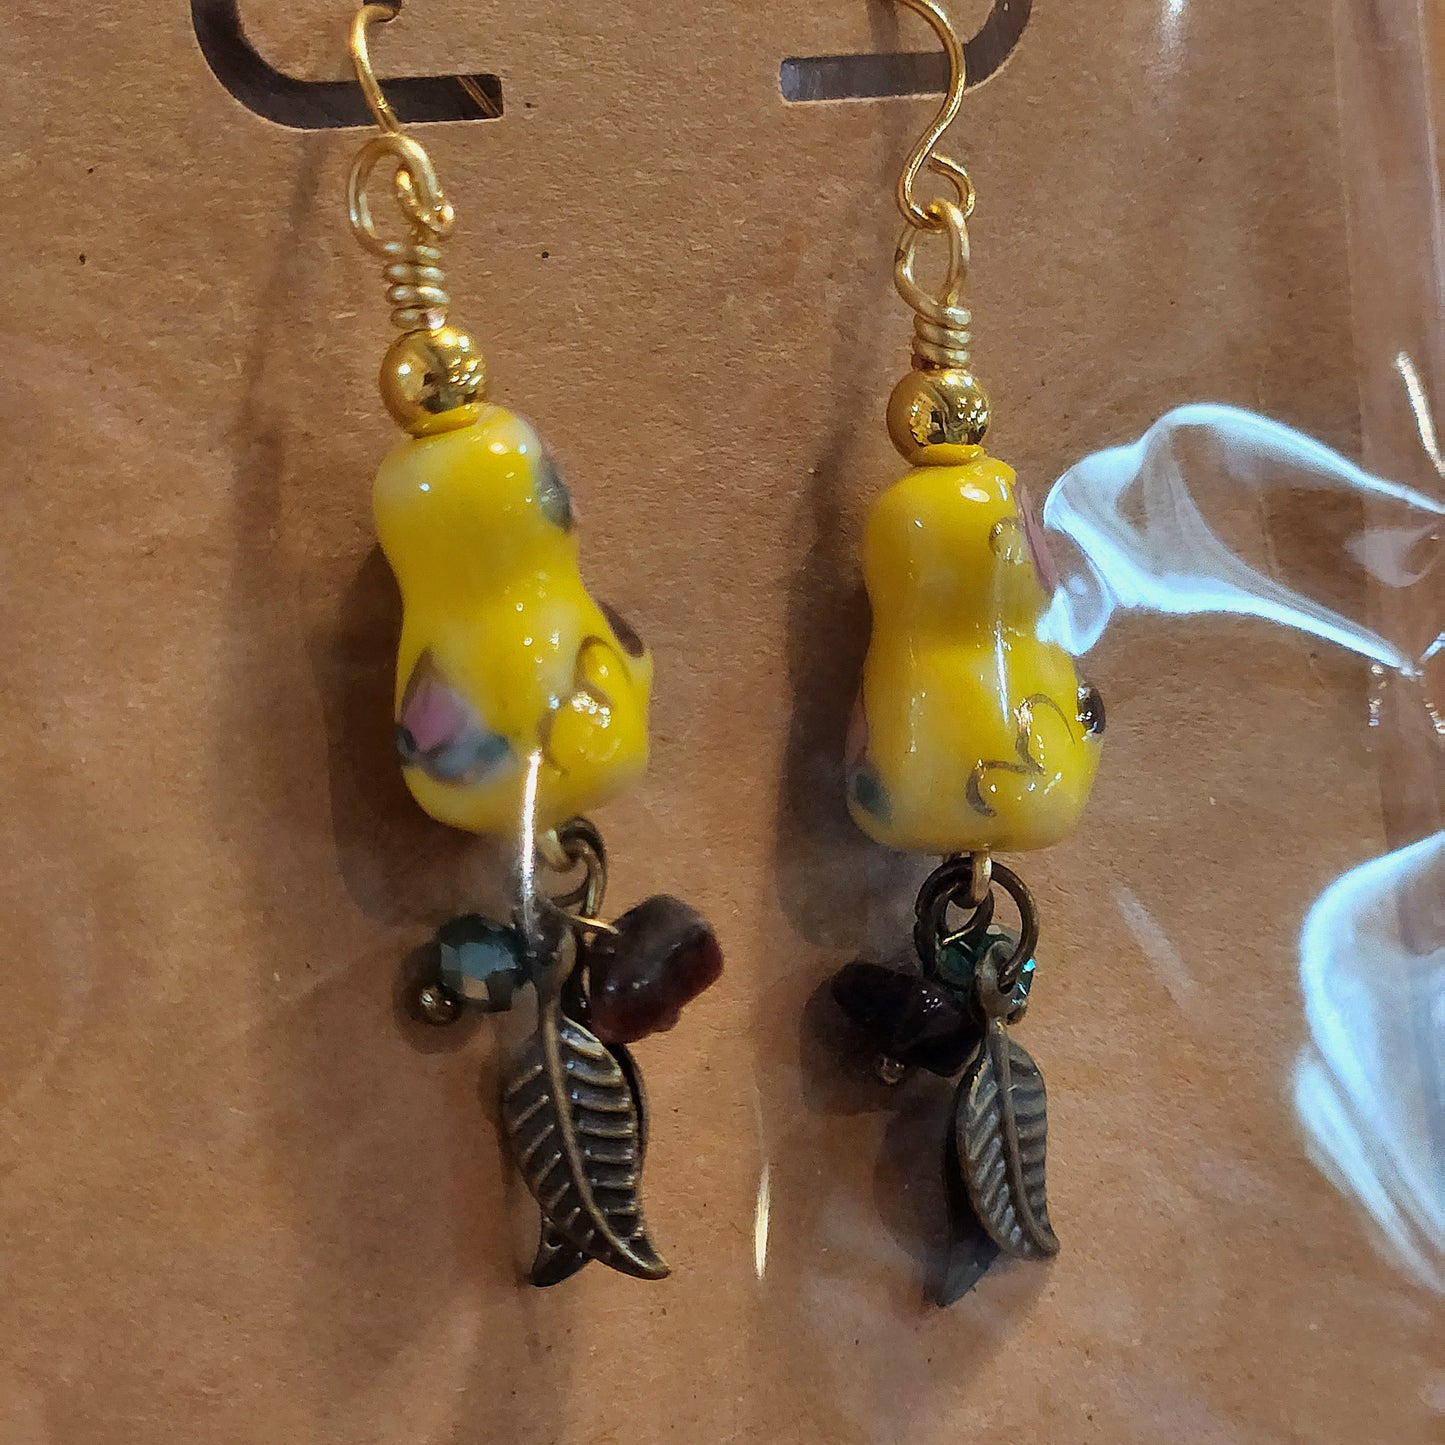 Money / Parrot Earrings